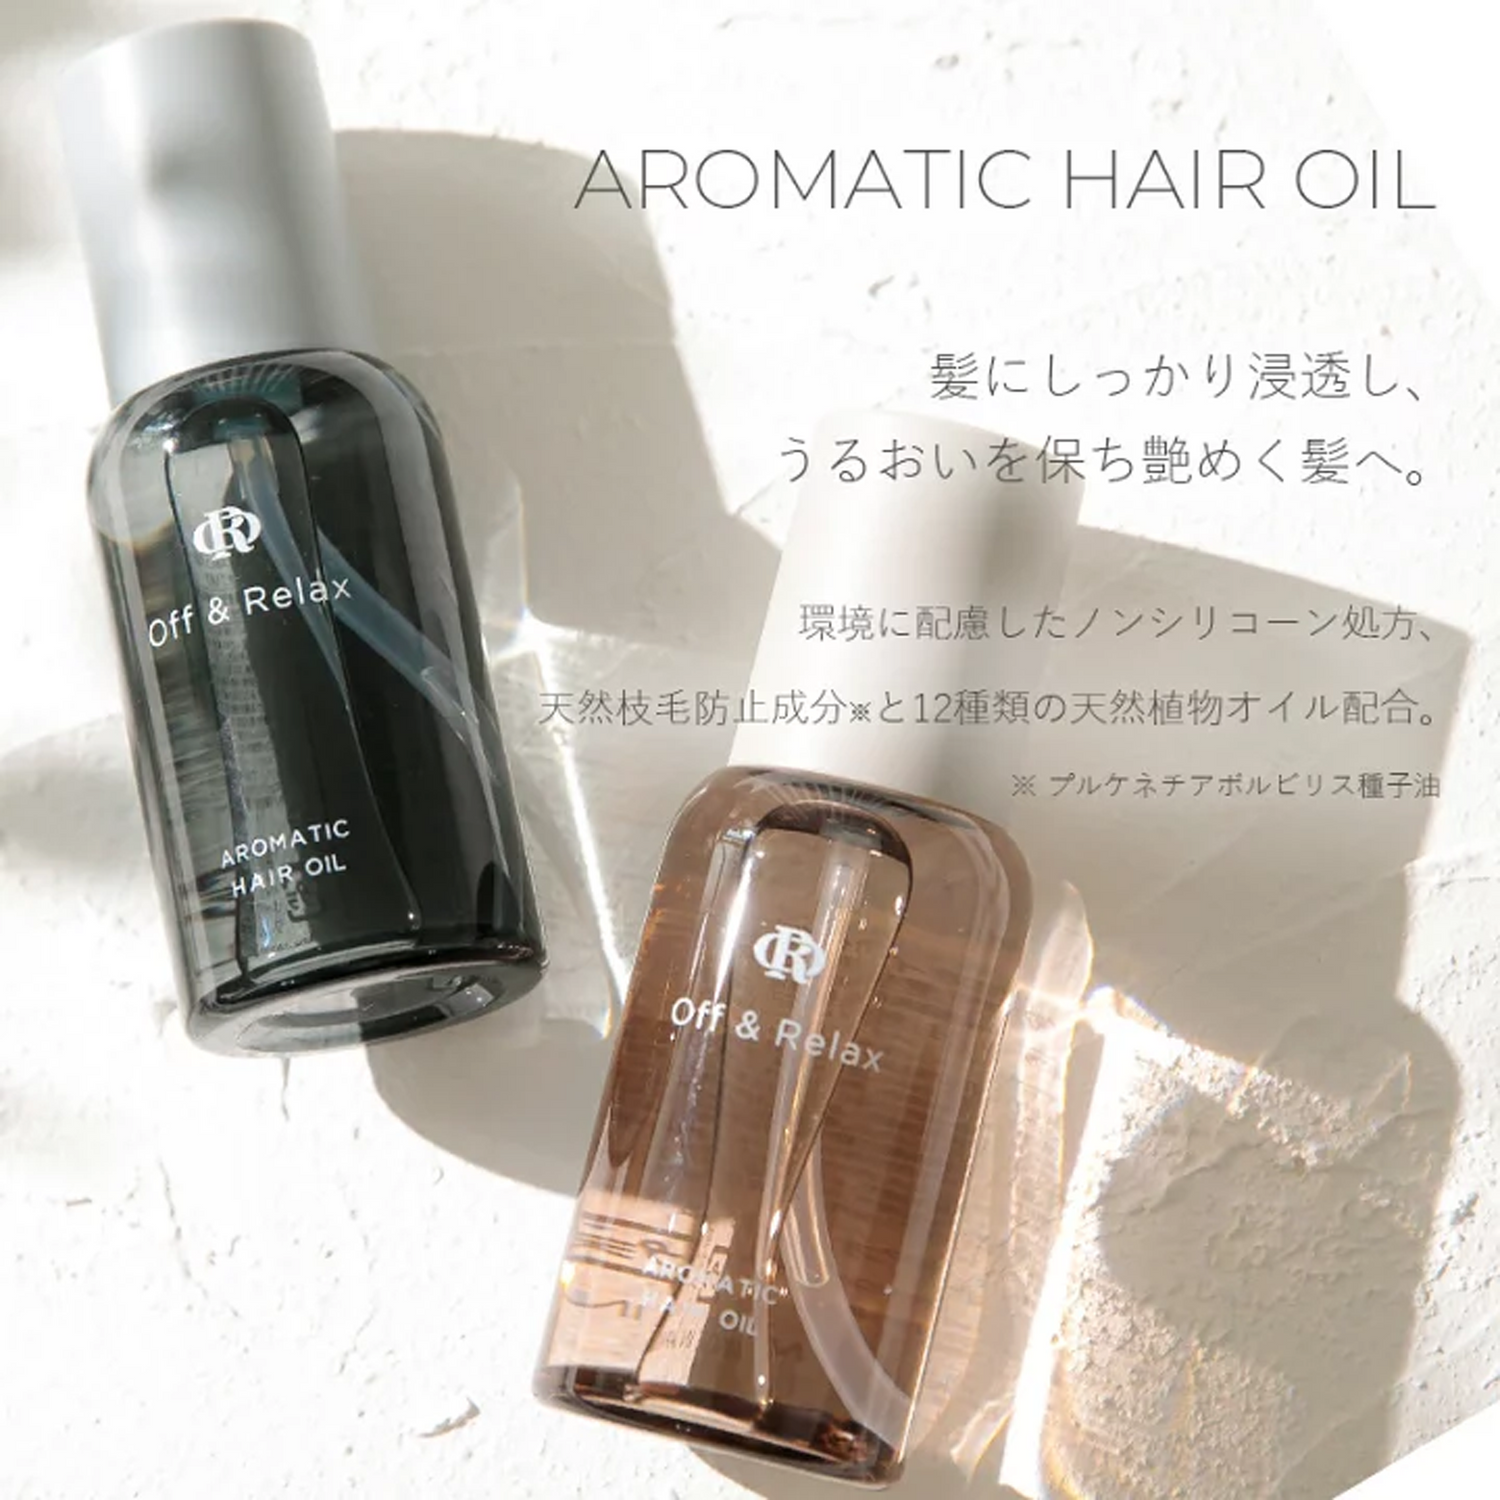 Off &amp; Relax Spa Hair Oil 80ml